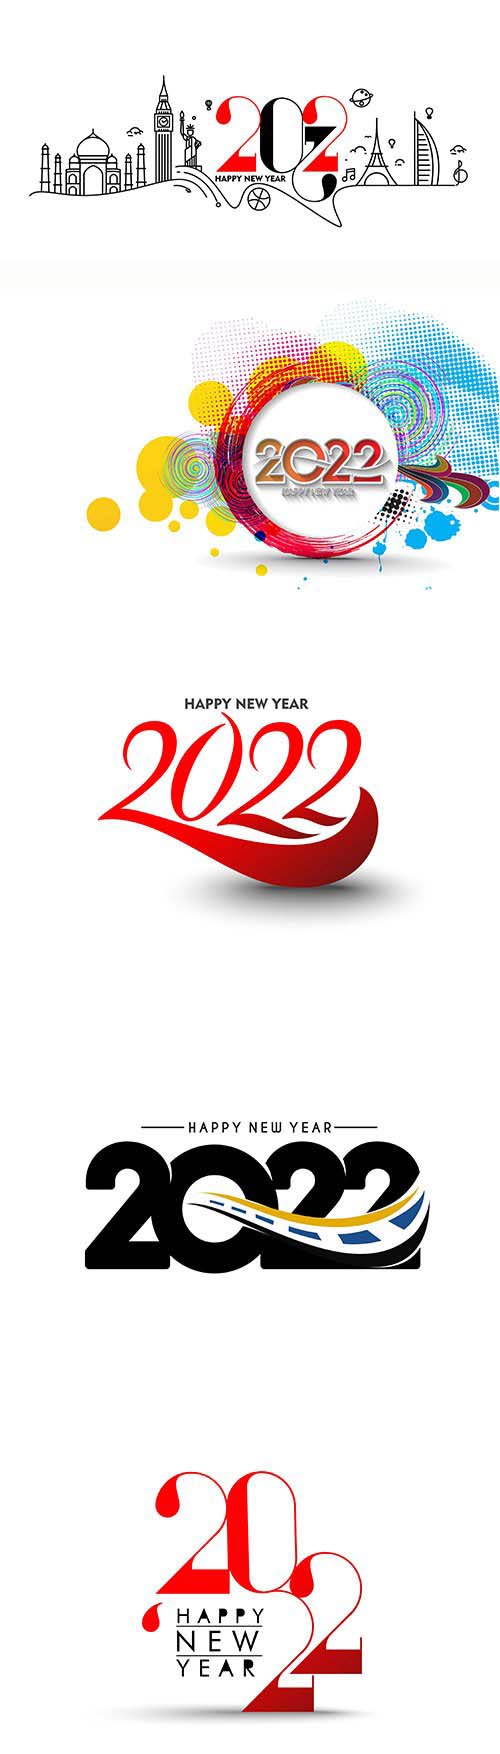 Happy new year 2022 text typography vector design